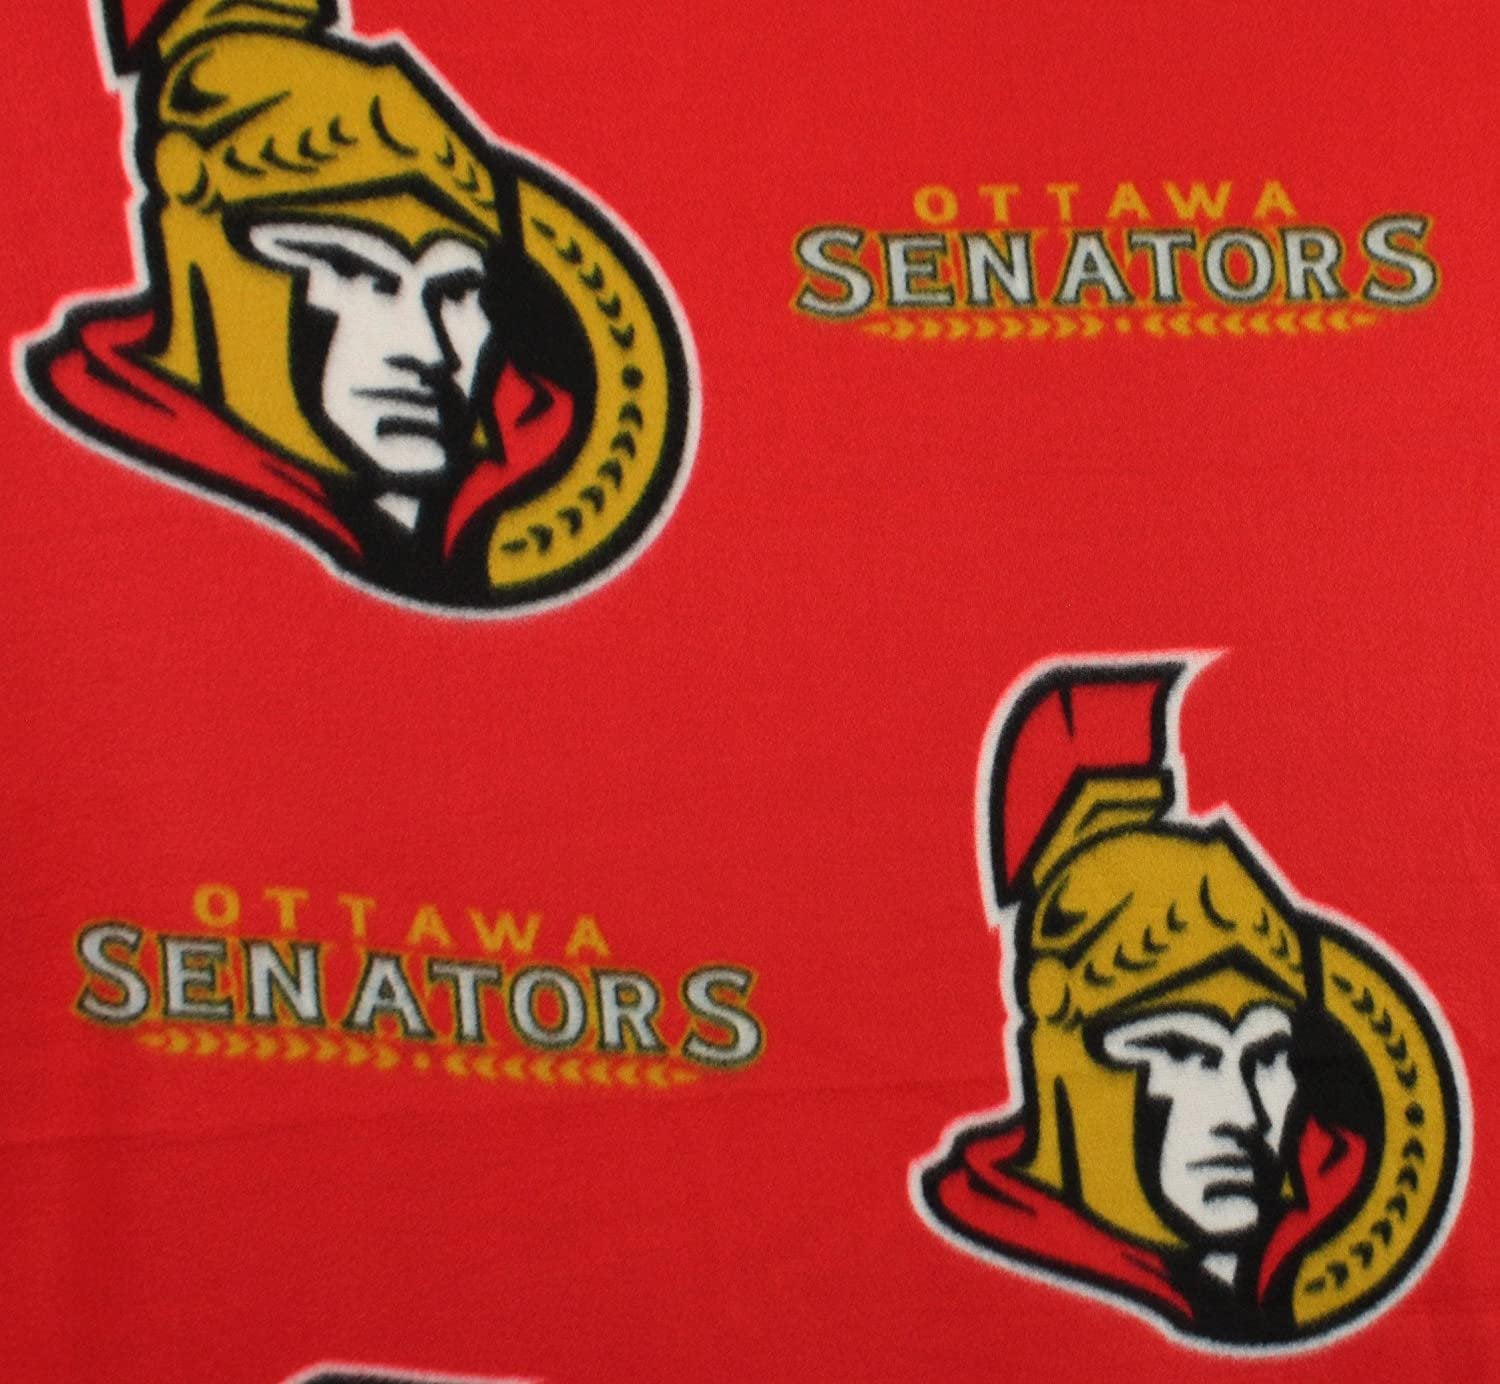 Ottawa Senators Throw Blanket, Soft Fleece, 50x60 Inch, Lightweight, Repeater Design